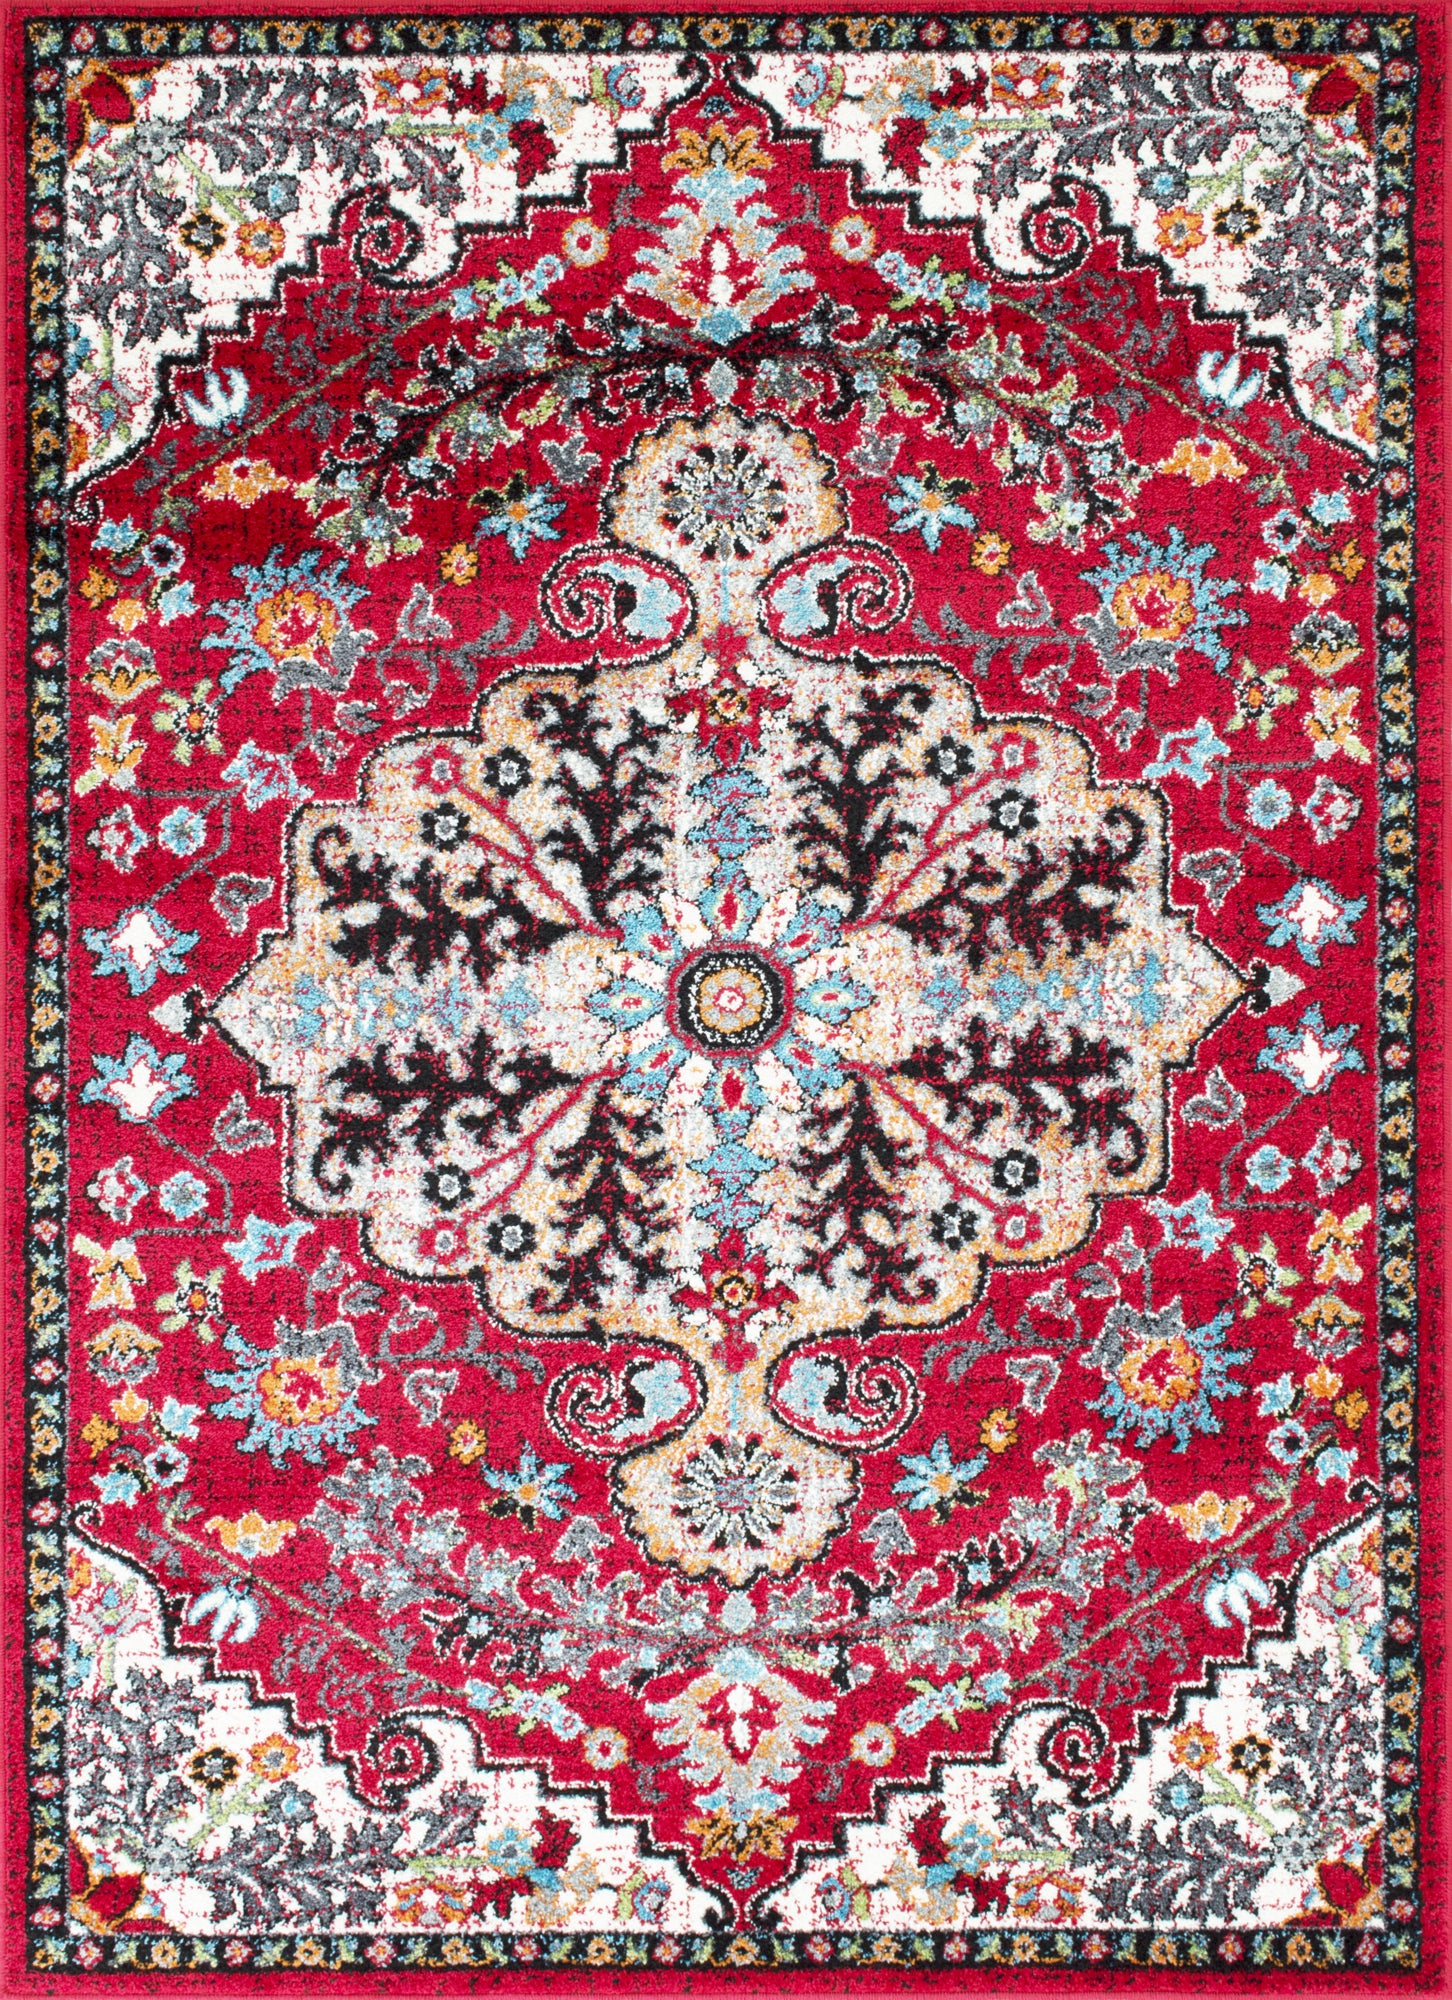 American cover design / Persian weavers Ibiza 183 Volcano Rug